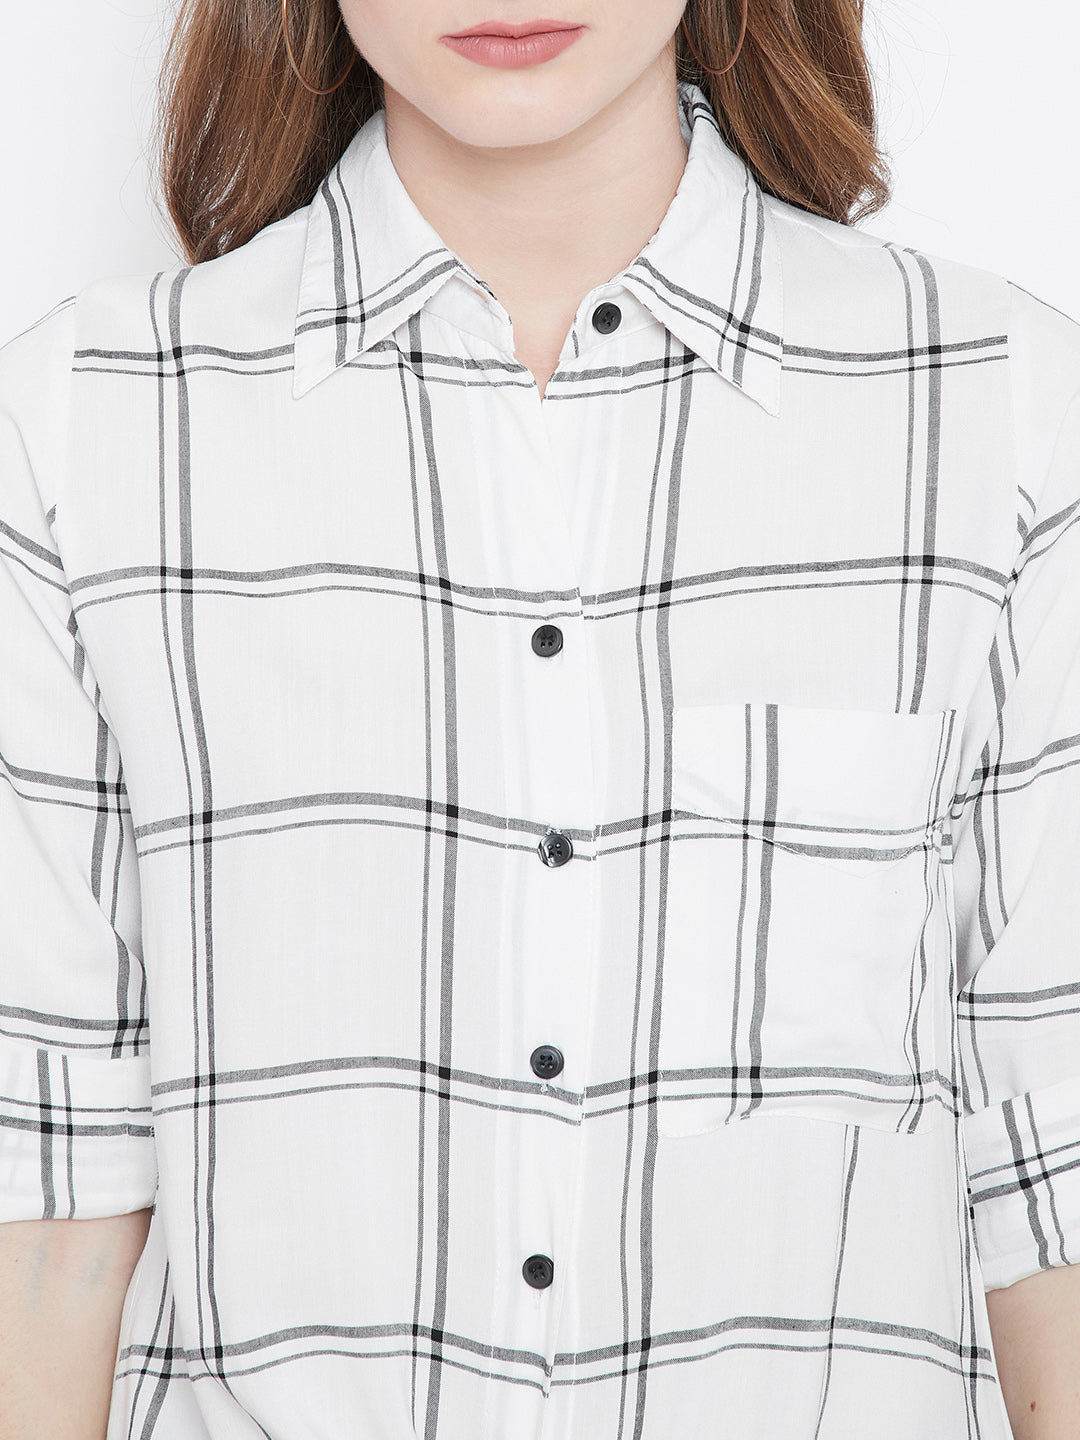 White & Black Checked Shirt Style Top - Berrylush